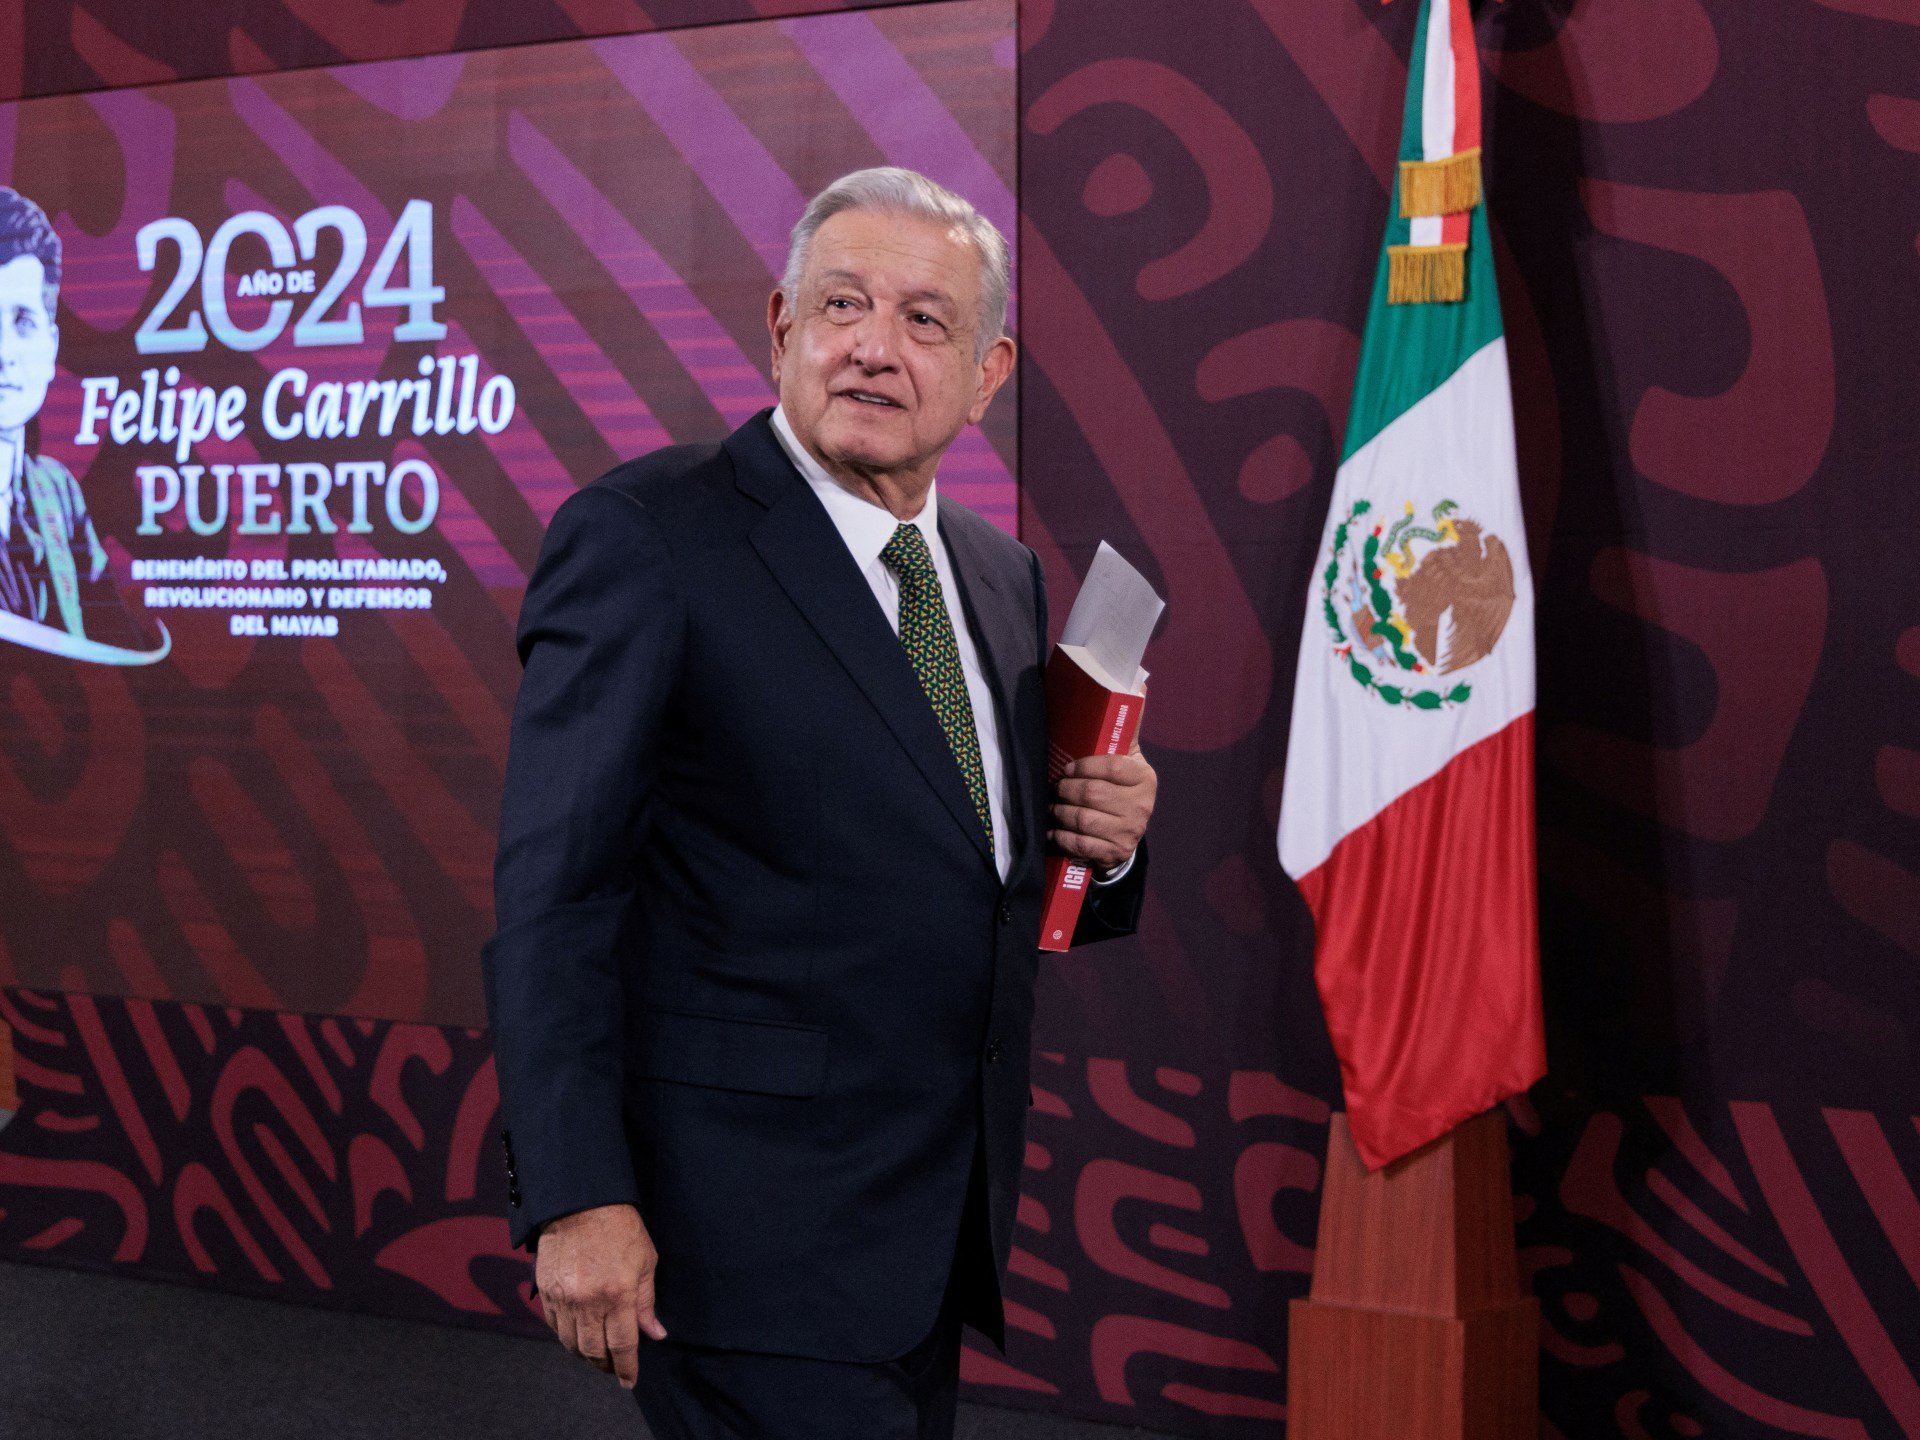 Amid diplomatic spat, Mexico grants former Ecuadorian vice president asylum